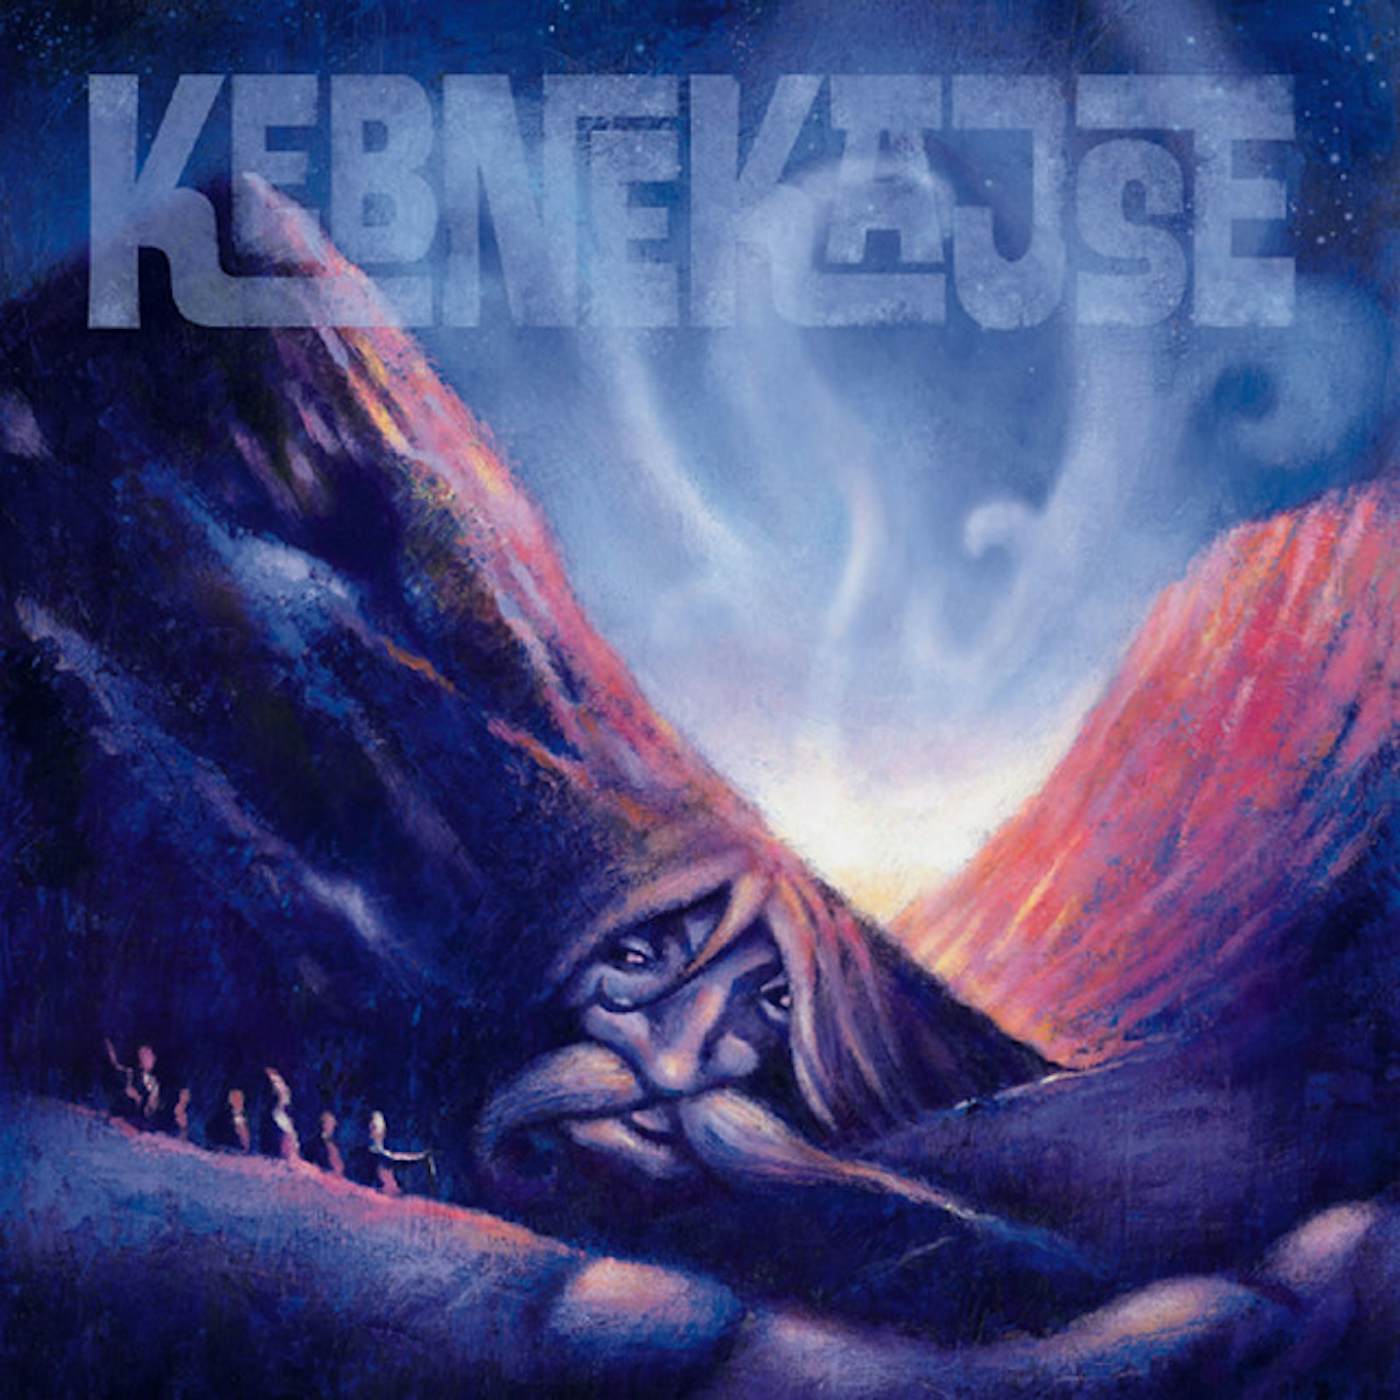 Kebnekajse Vinyl Record